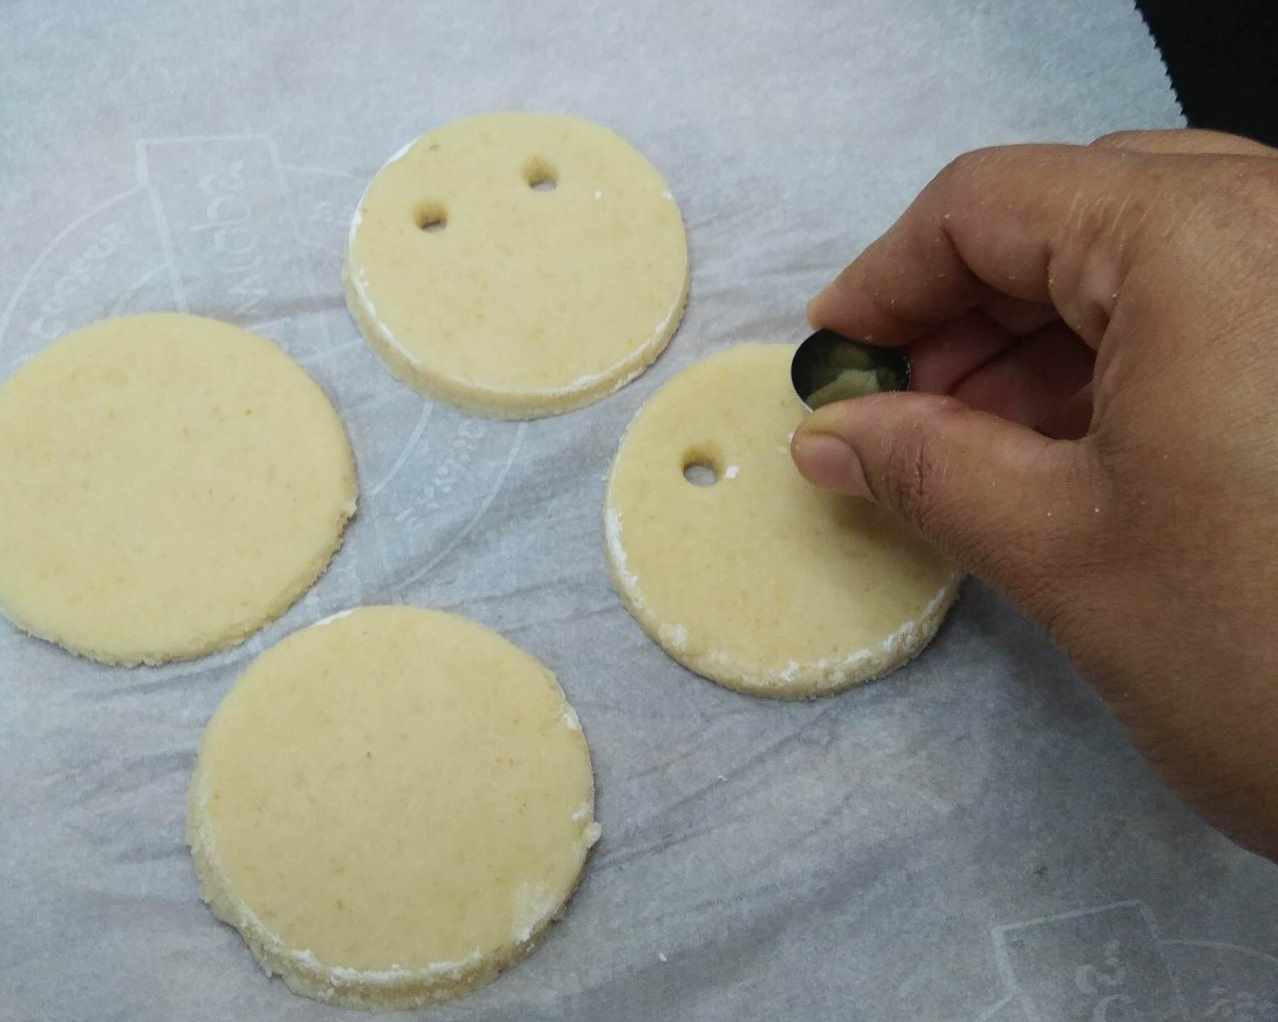 How to make Potato Smiley